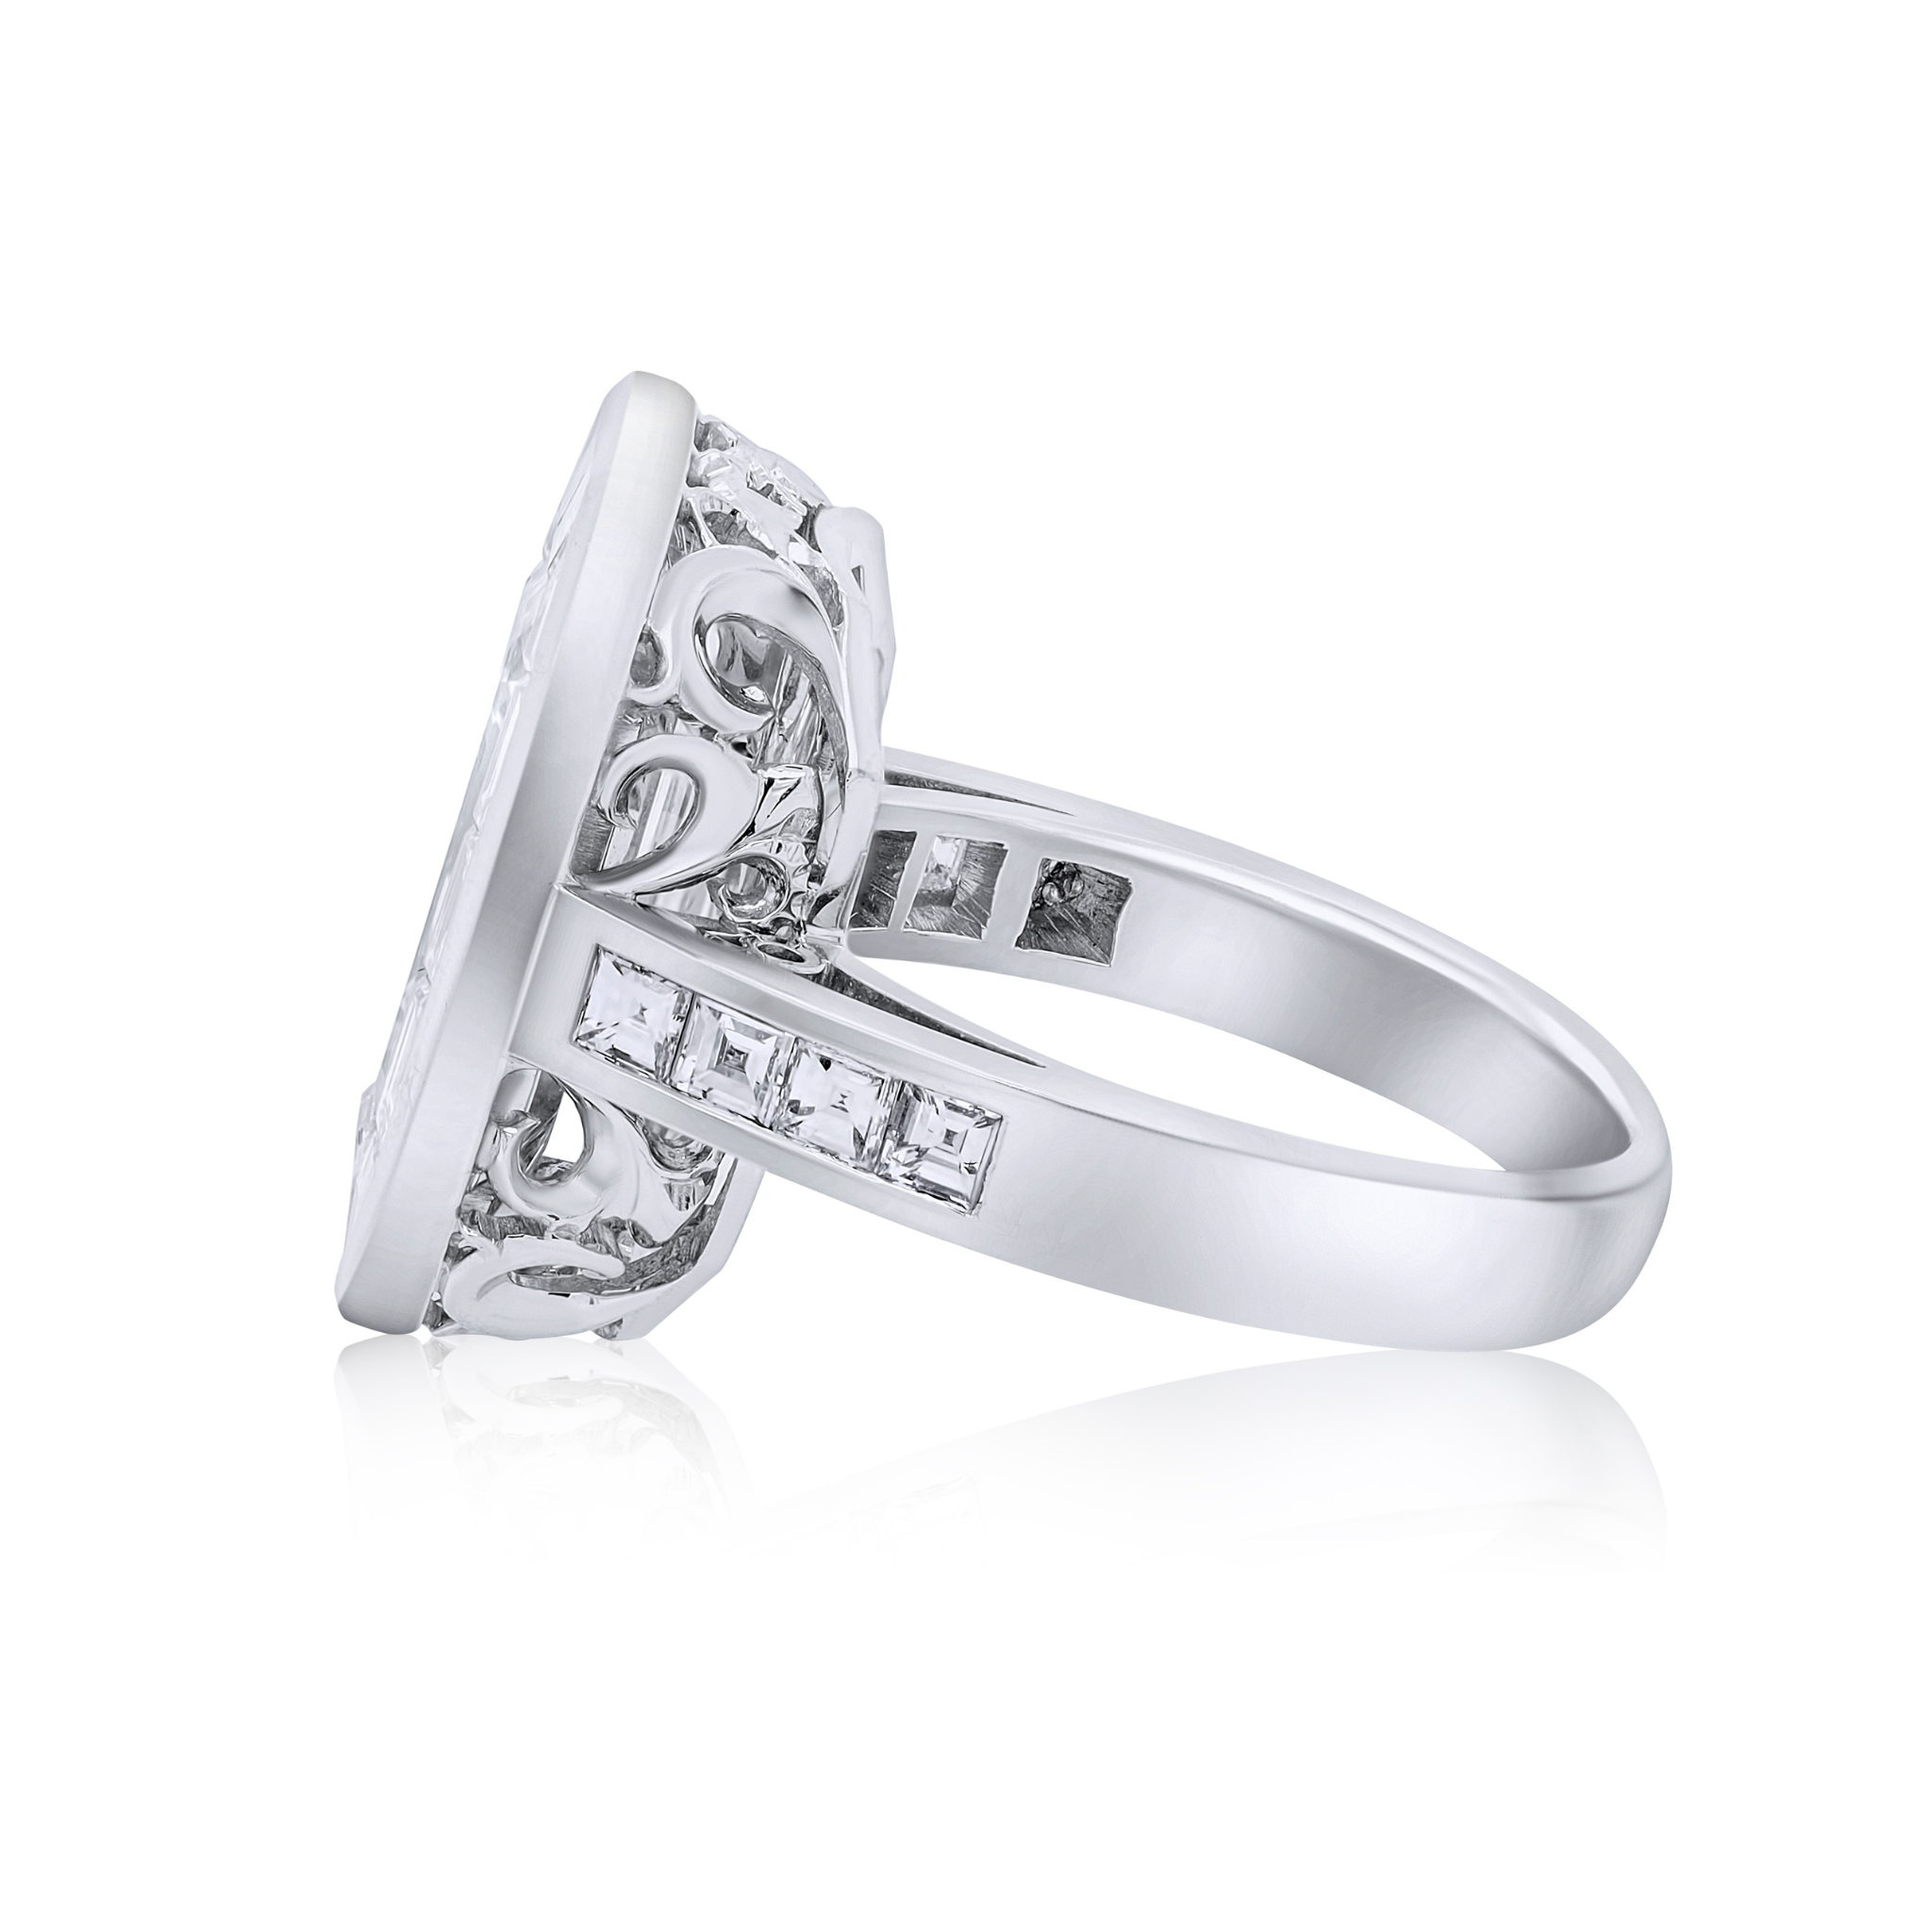 4.14ct Emerald Cut Diamond Ring.jpg